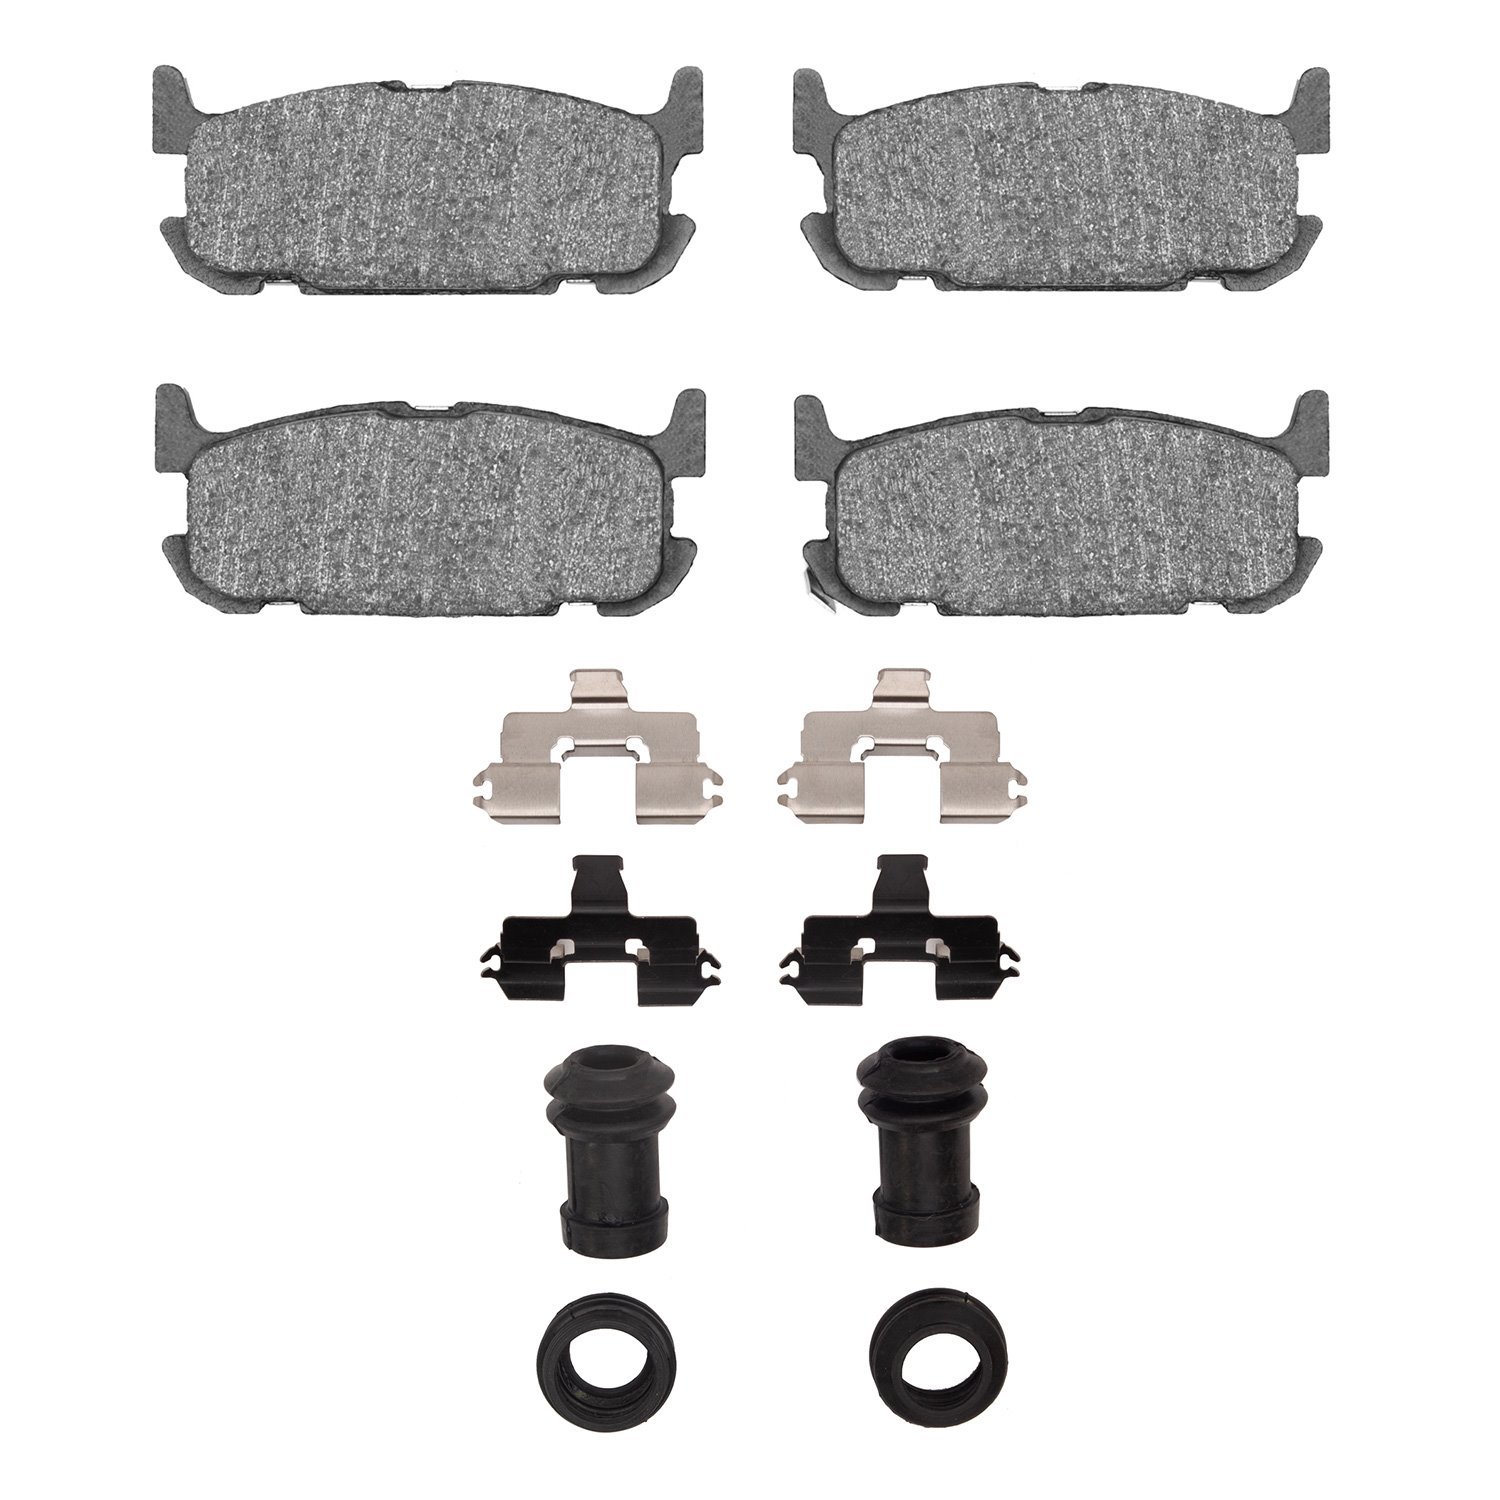 1551-0891-01 5000 Advanced Ceramic Brake Pads & Hardware Kit, 2001-2005 Ford/Lincoln/Mercury/Mazda, Position: Rear